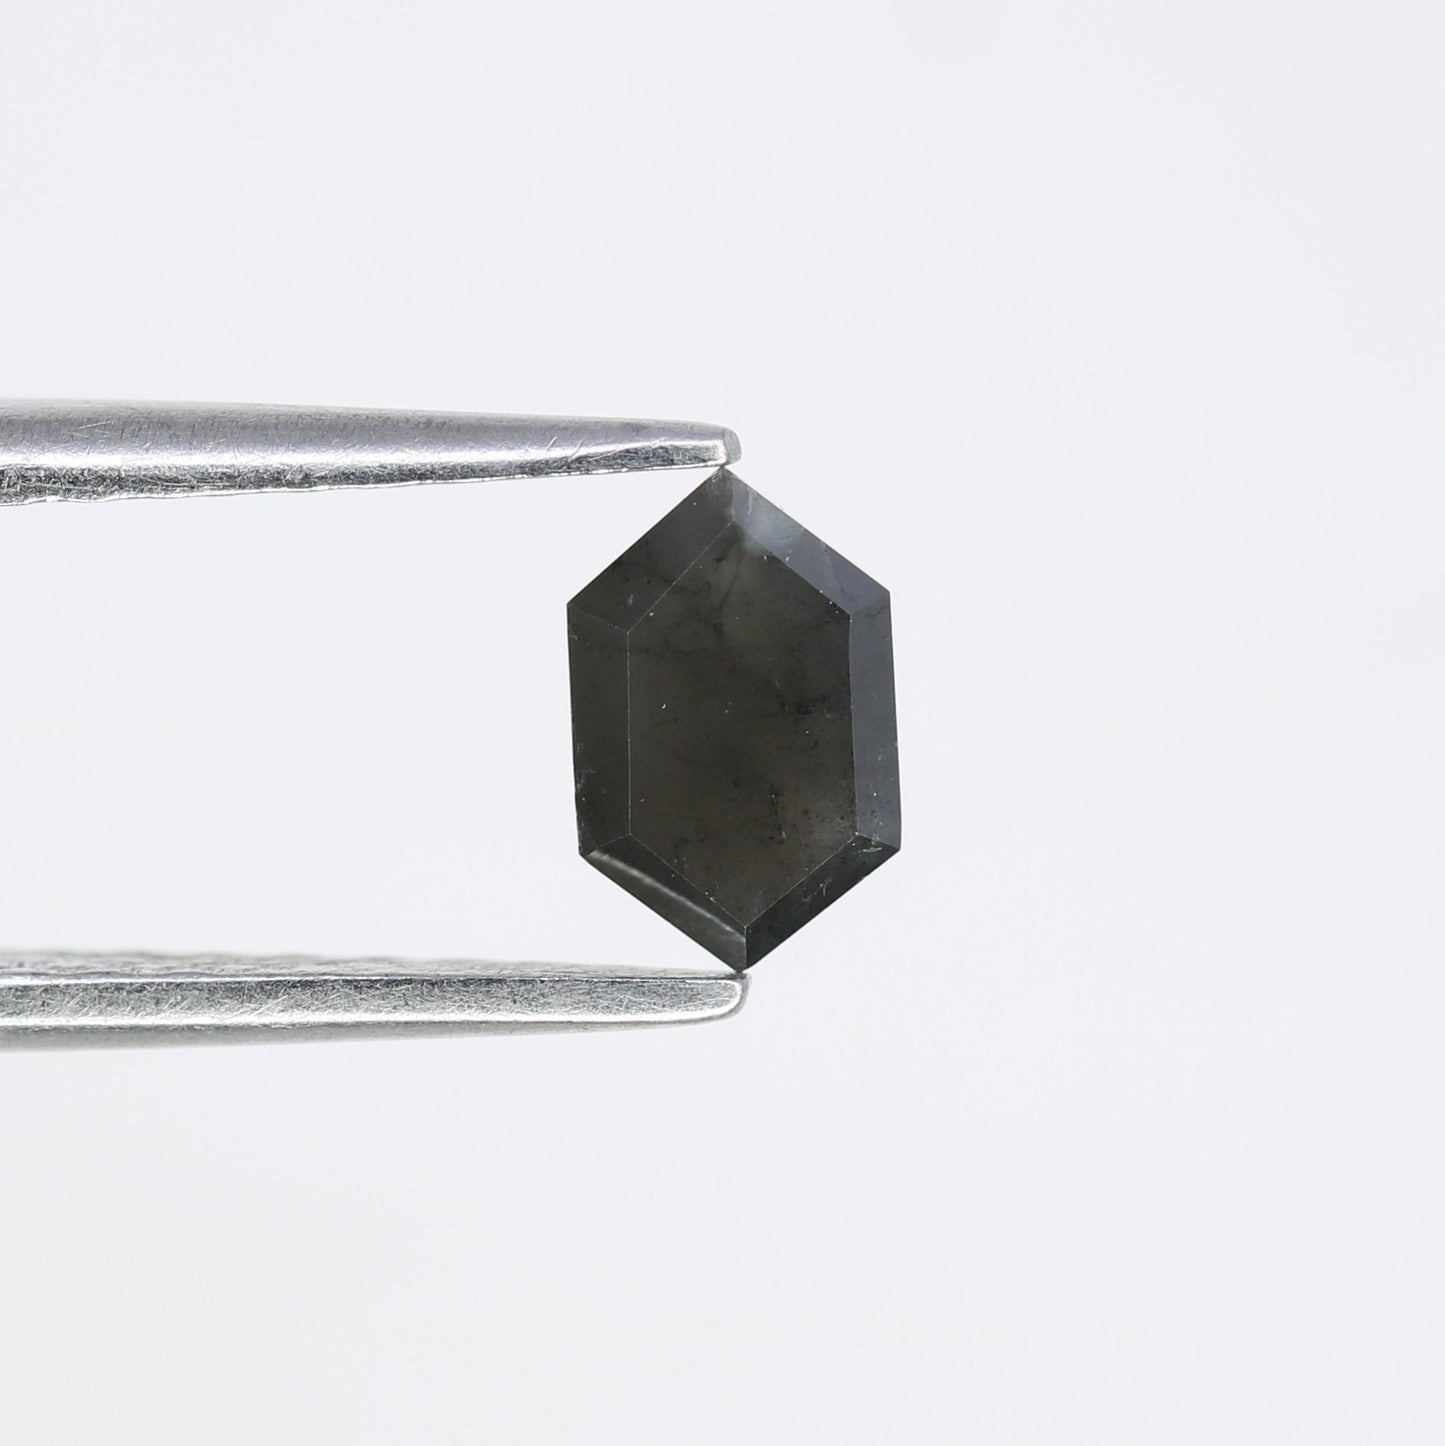 0.61 CT Elongated Hexagon Cut Black Diamond For Engagement Ring